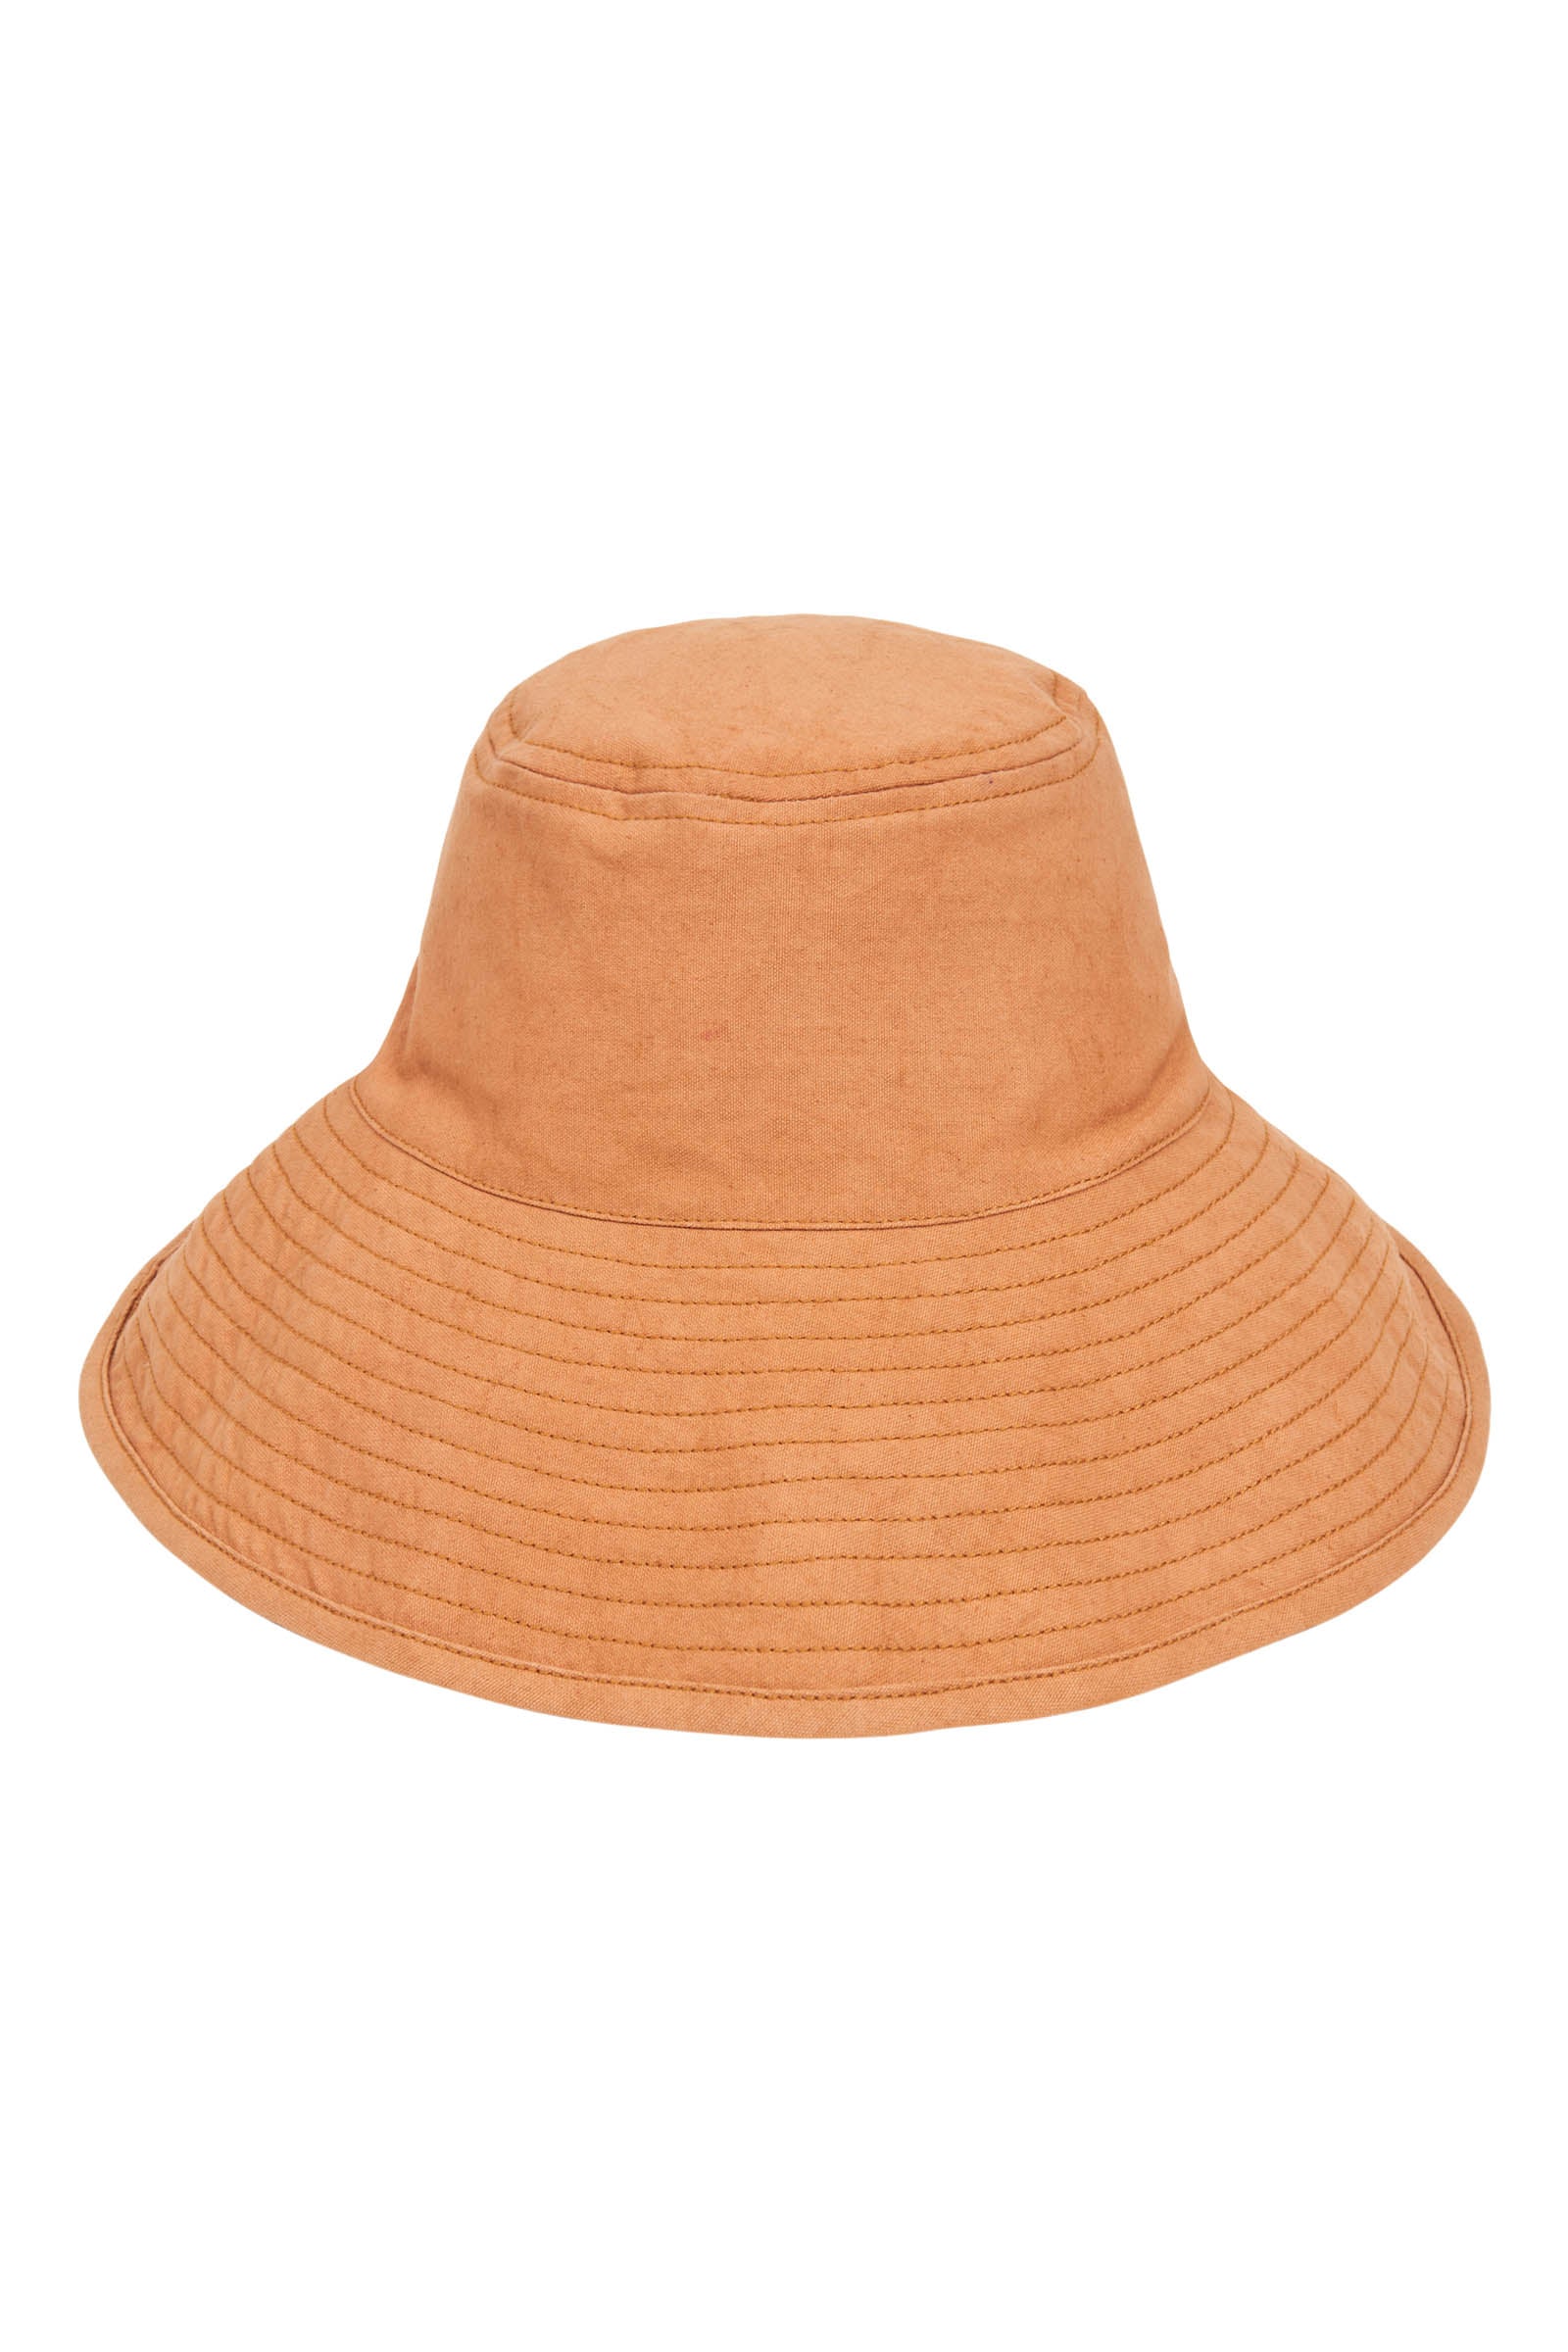 La Vie Hat - Caramel - eb&ive Hat